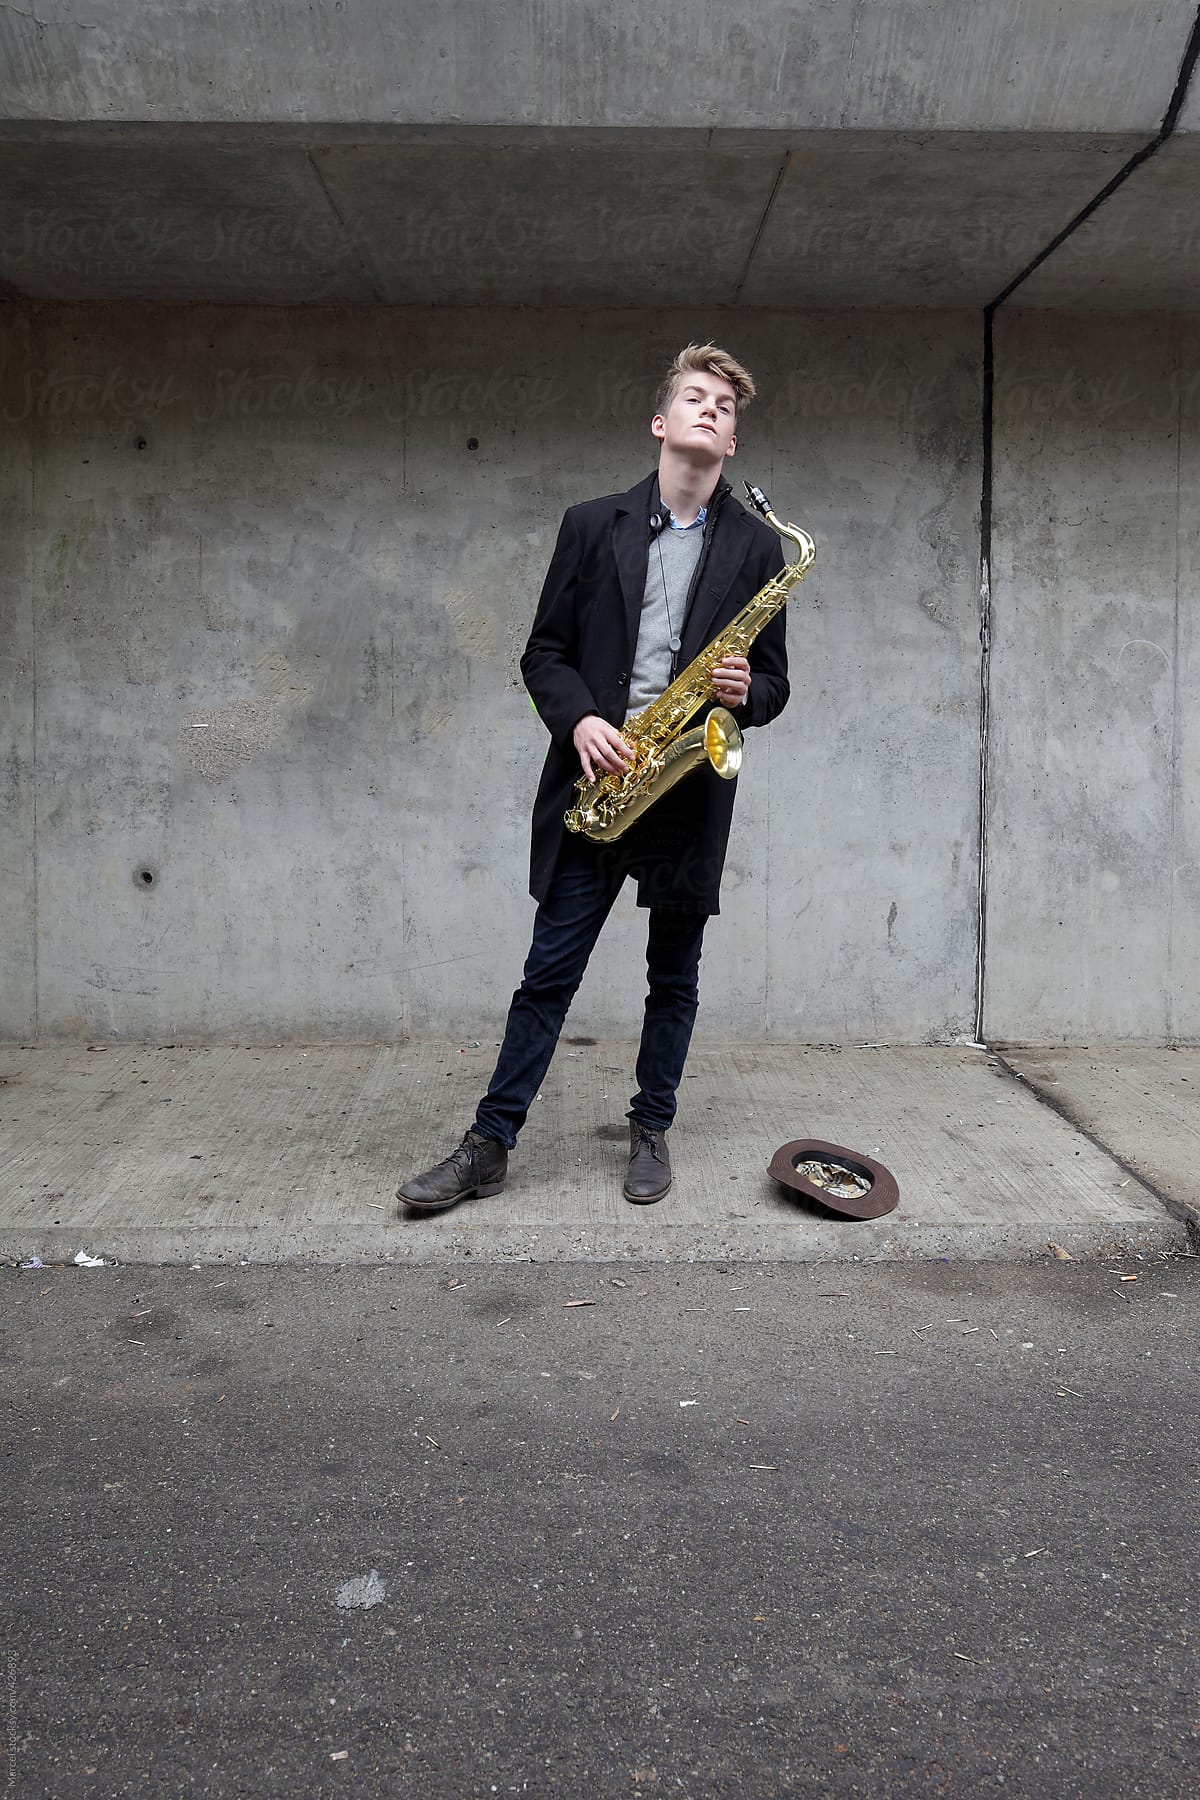 Saxophone player in urban tunnel